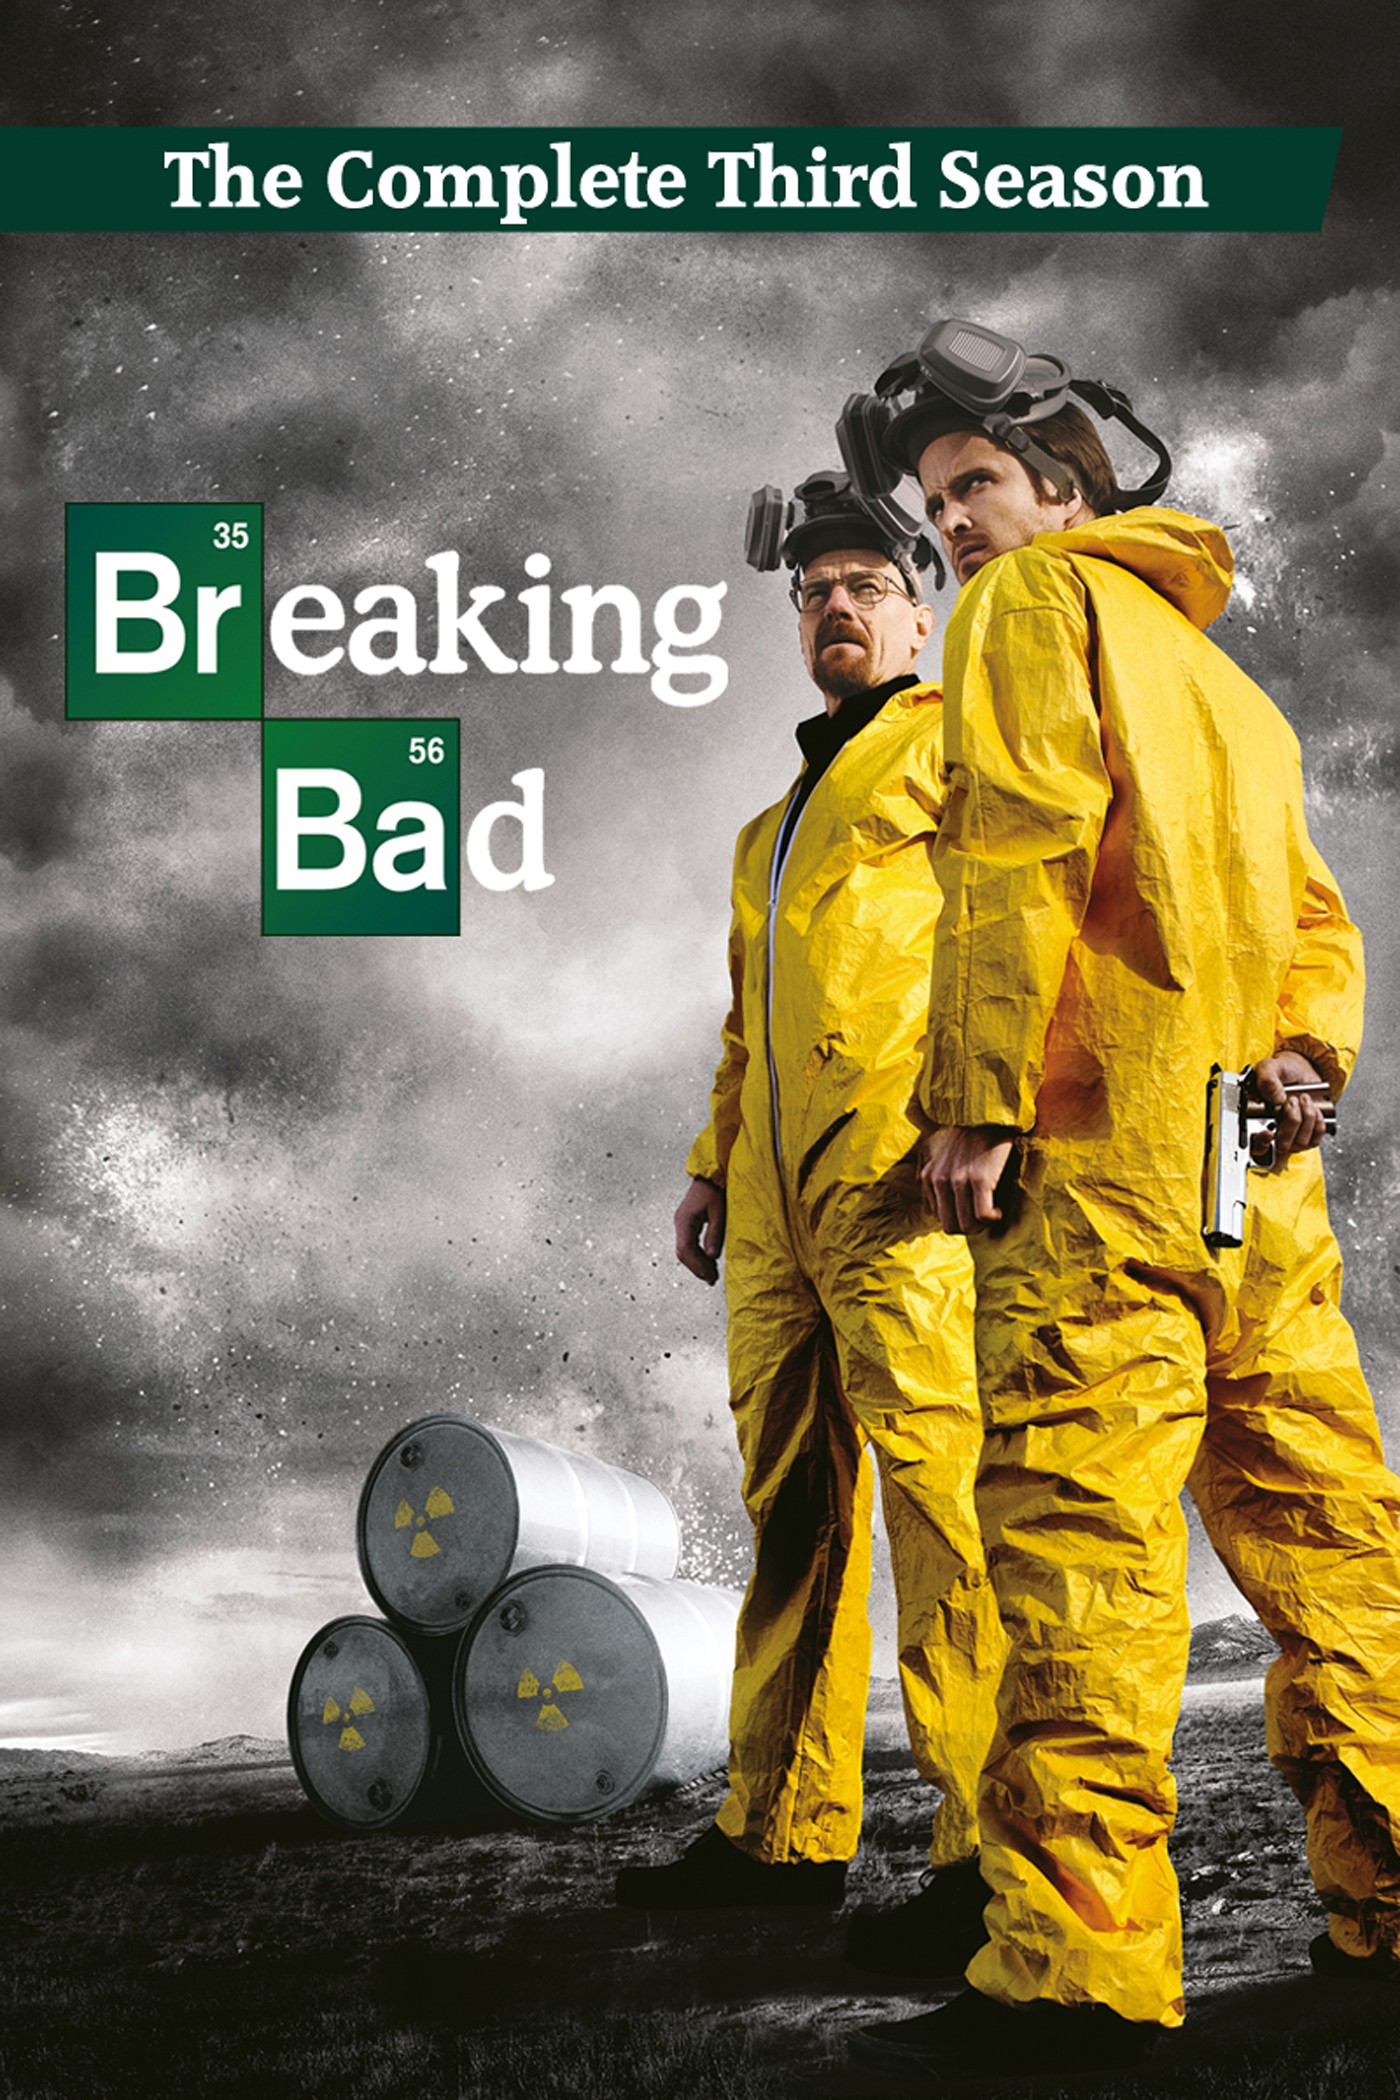 breaking bad season 1 poster